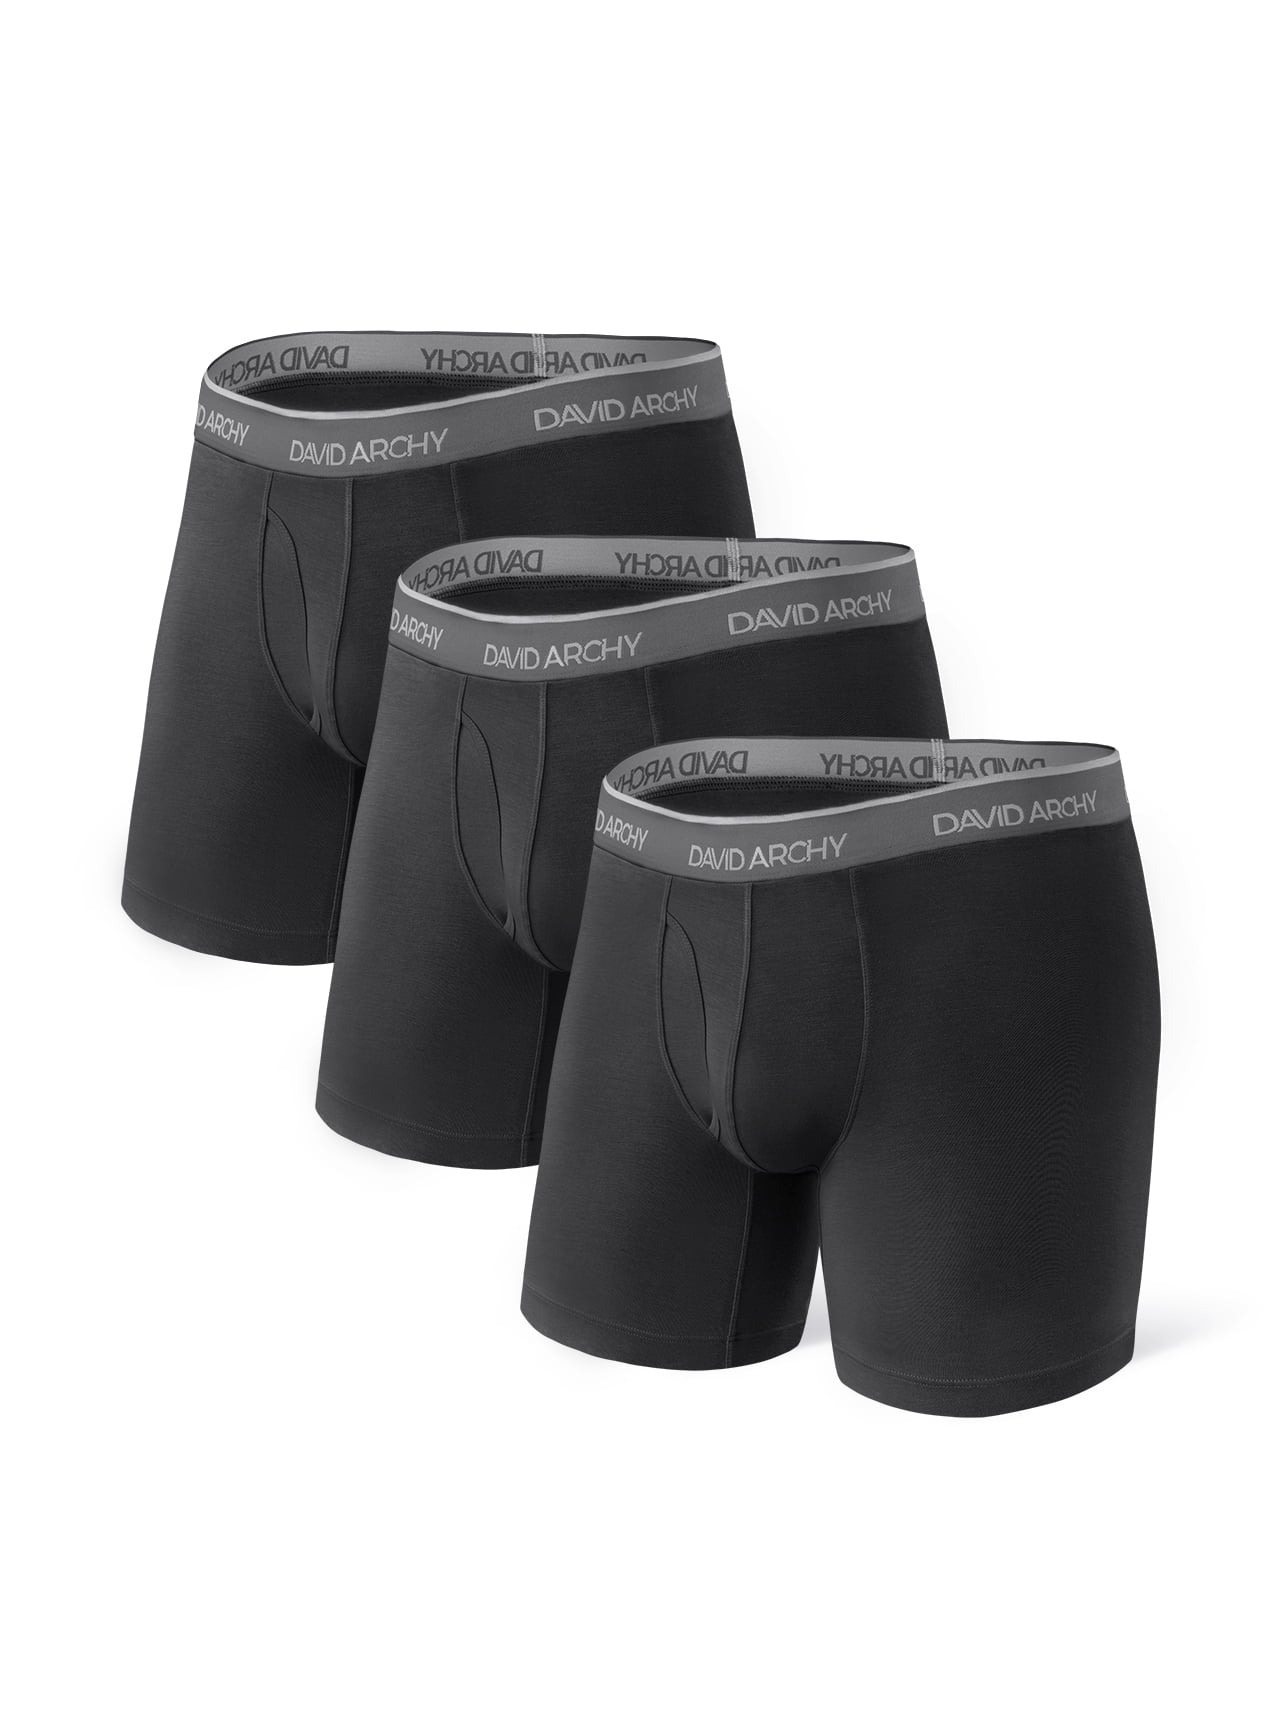 DAVID ARCHY Adult Men's Underwear Bamboo Boxer Briefs 3 Pack,Sizes S-XL ...